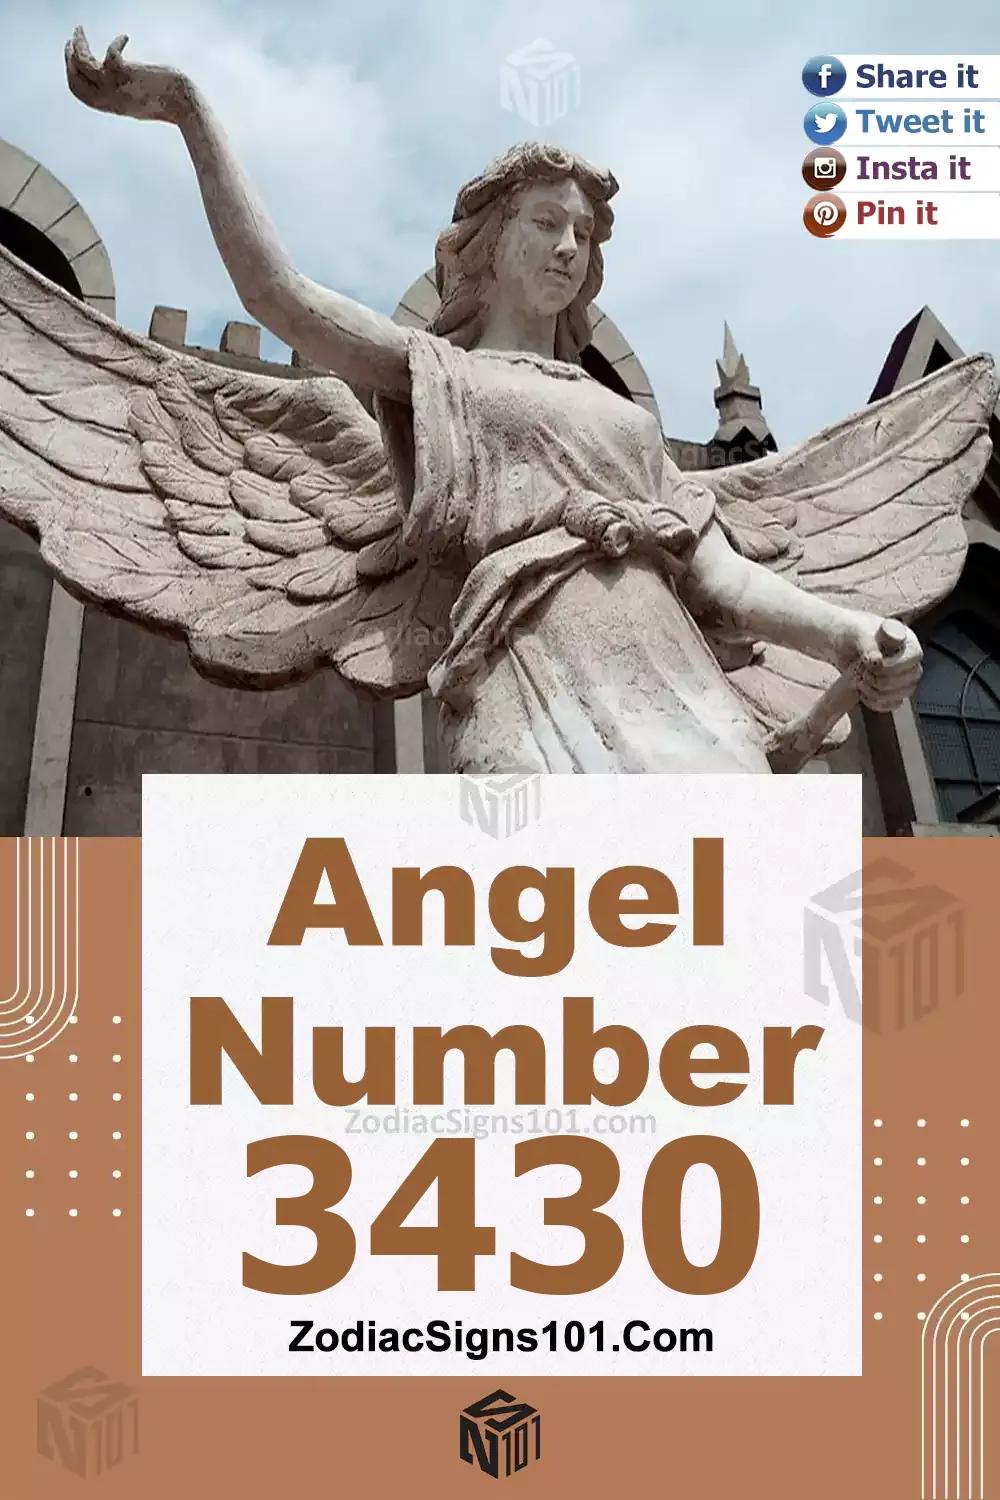 3430-Angel-Number-Meaning.jpg